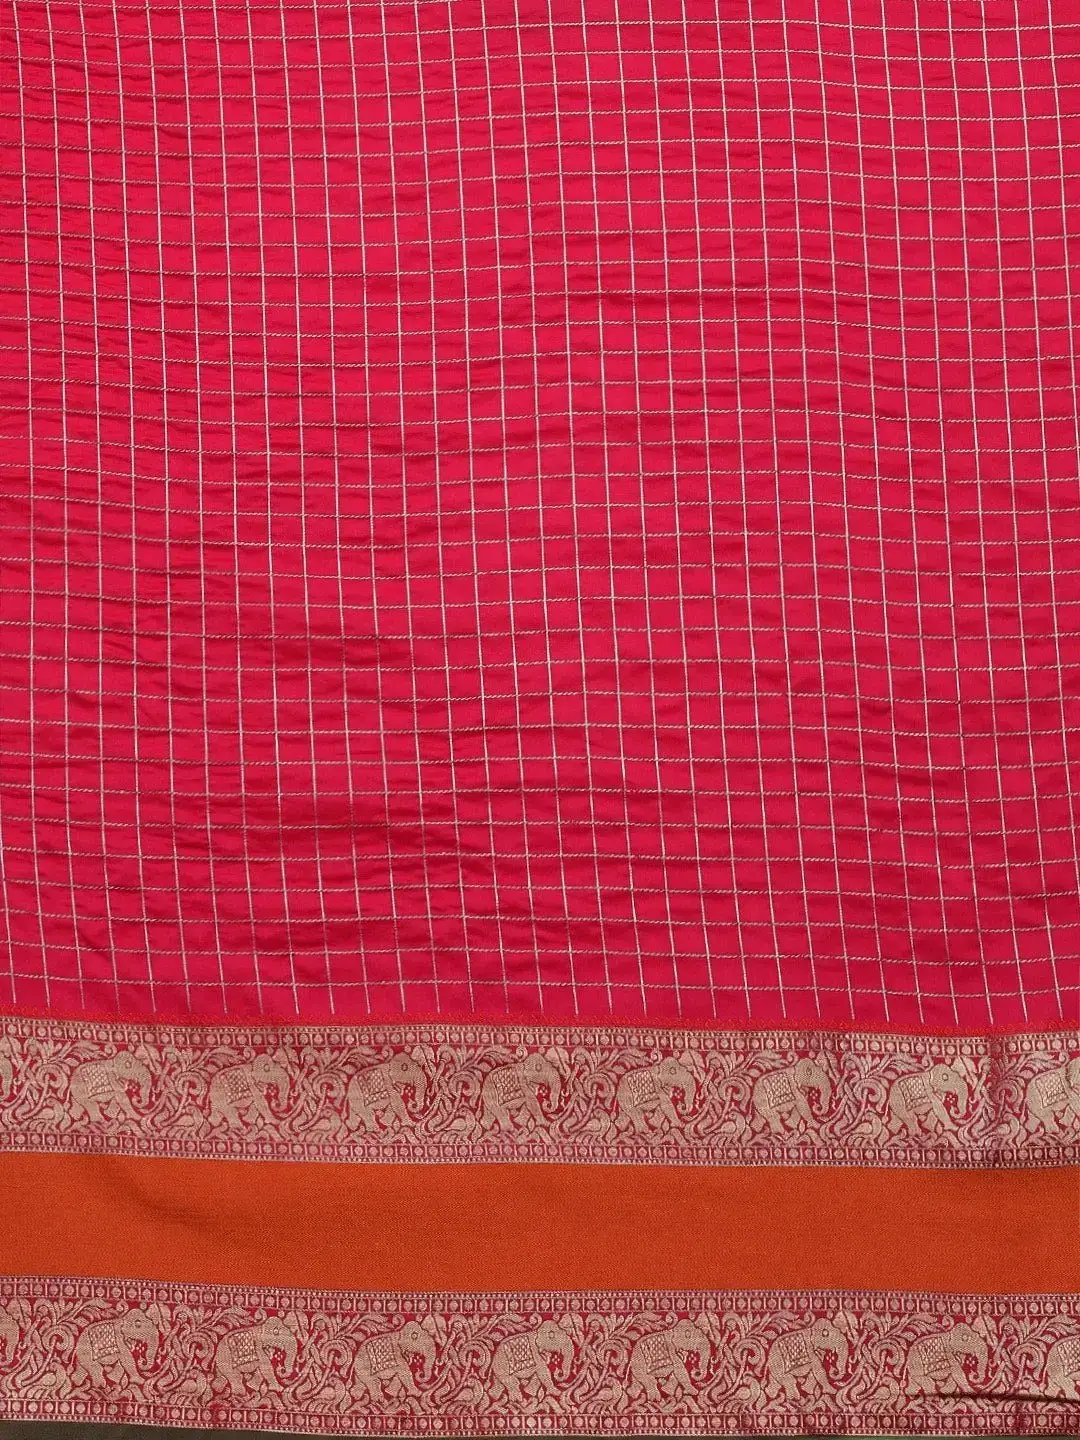 Stylish Banarasi Silk Saree with Checks and Woven Border